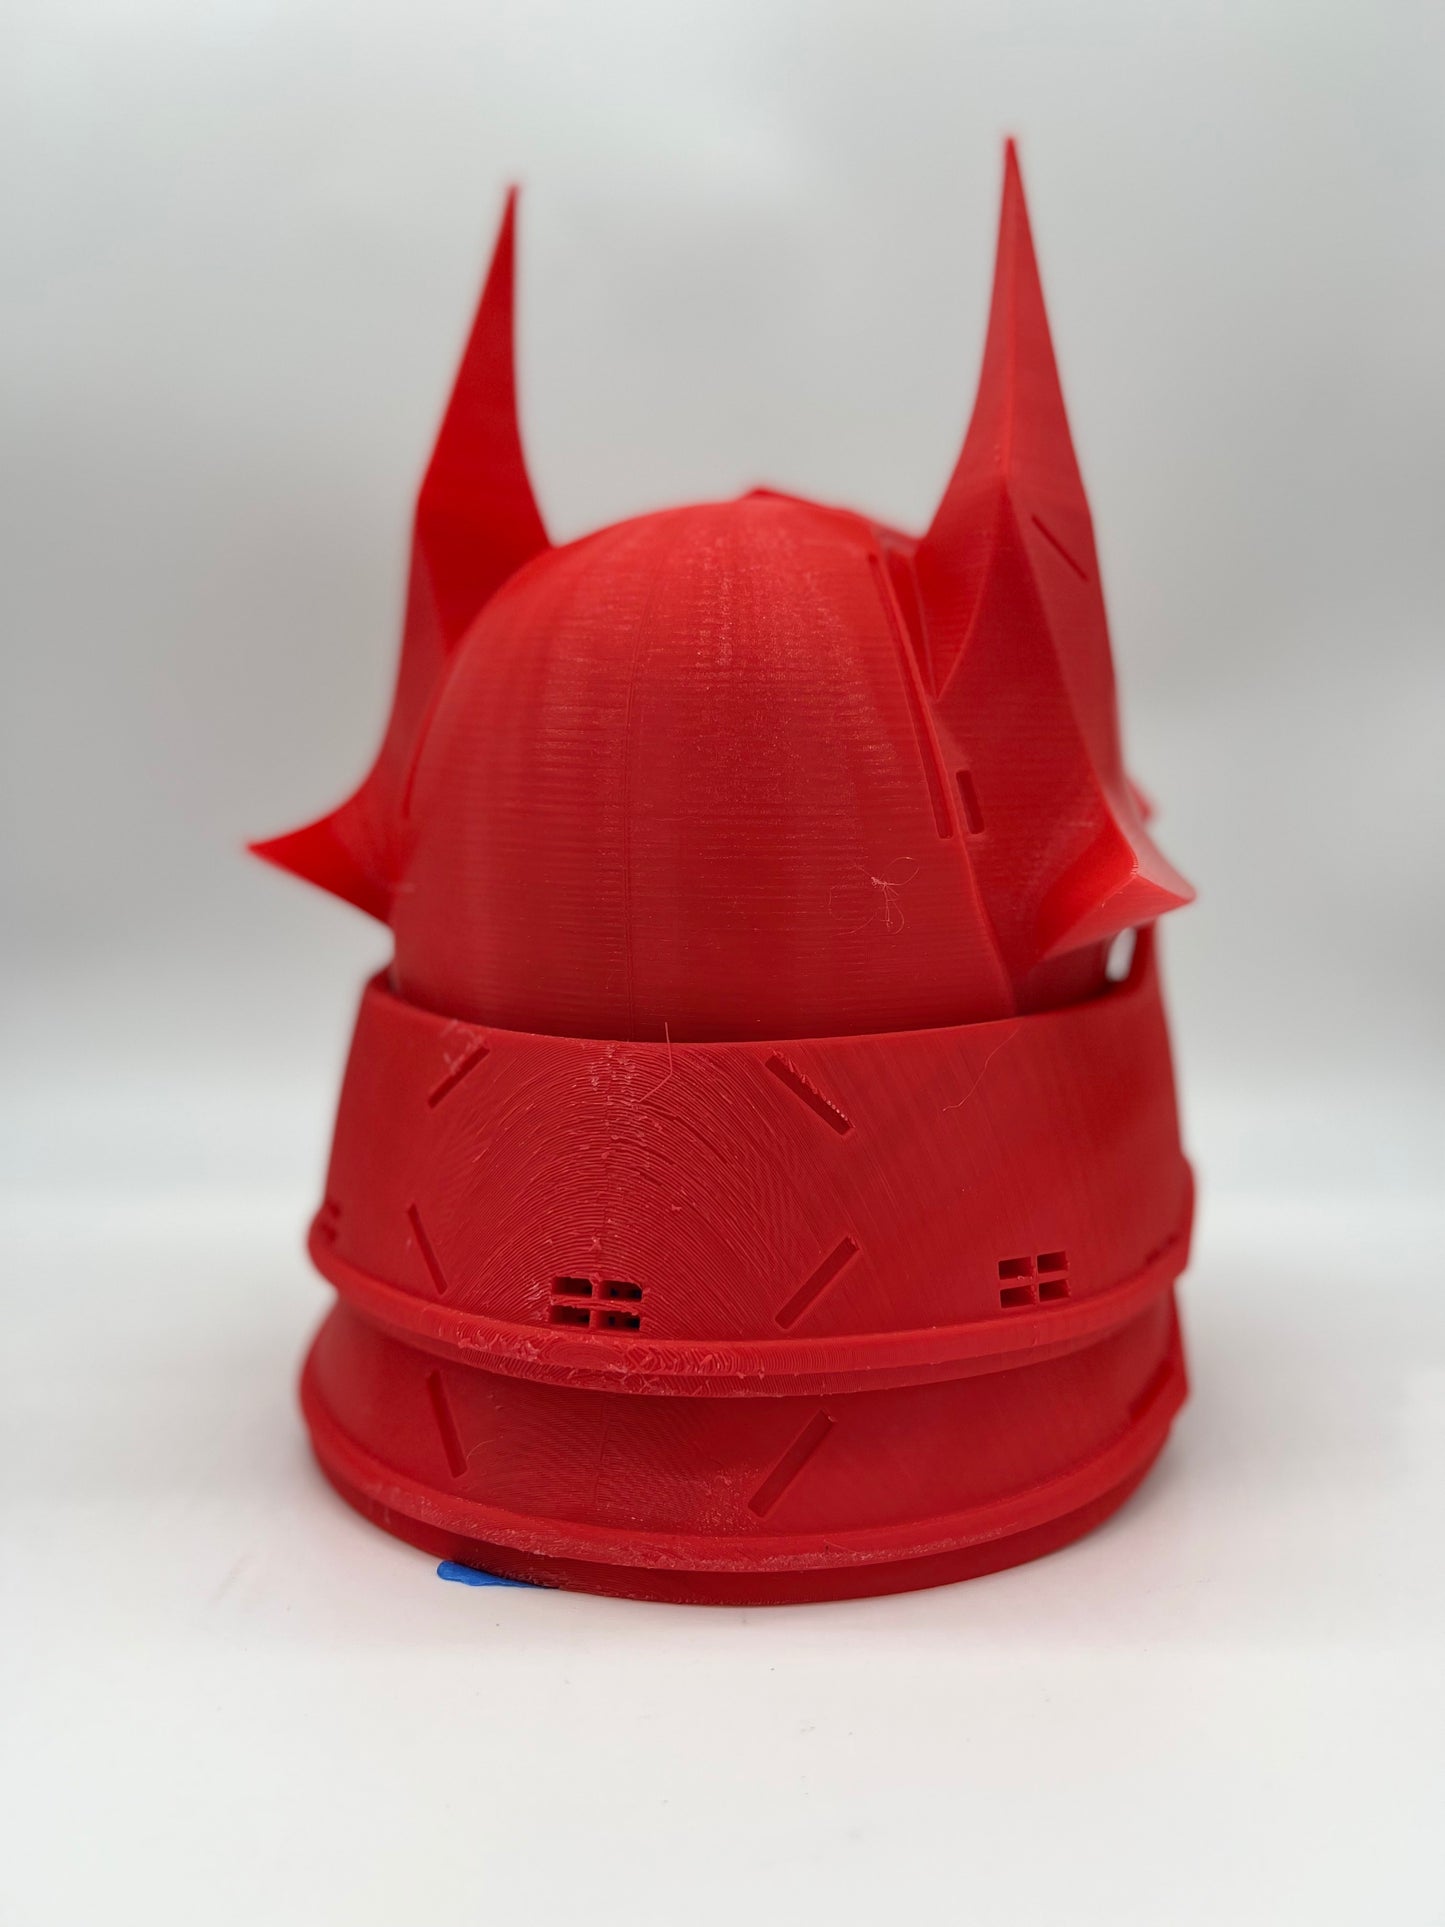 Shogun Batman Concept Cosplay Helmet